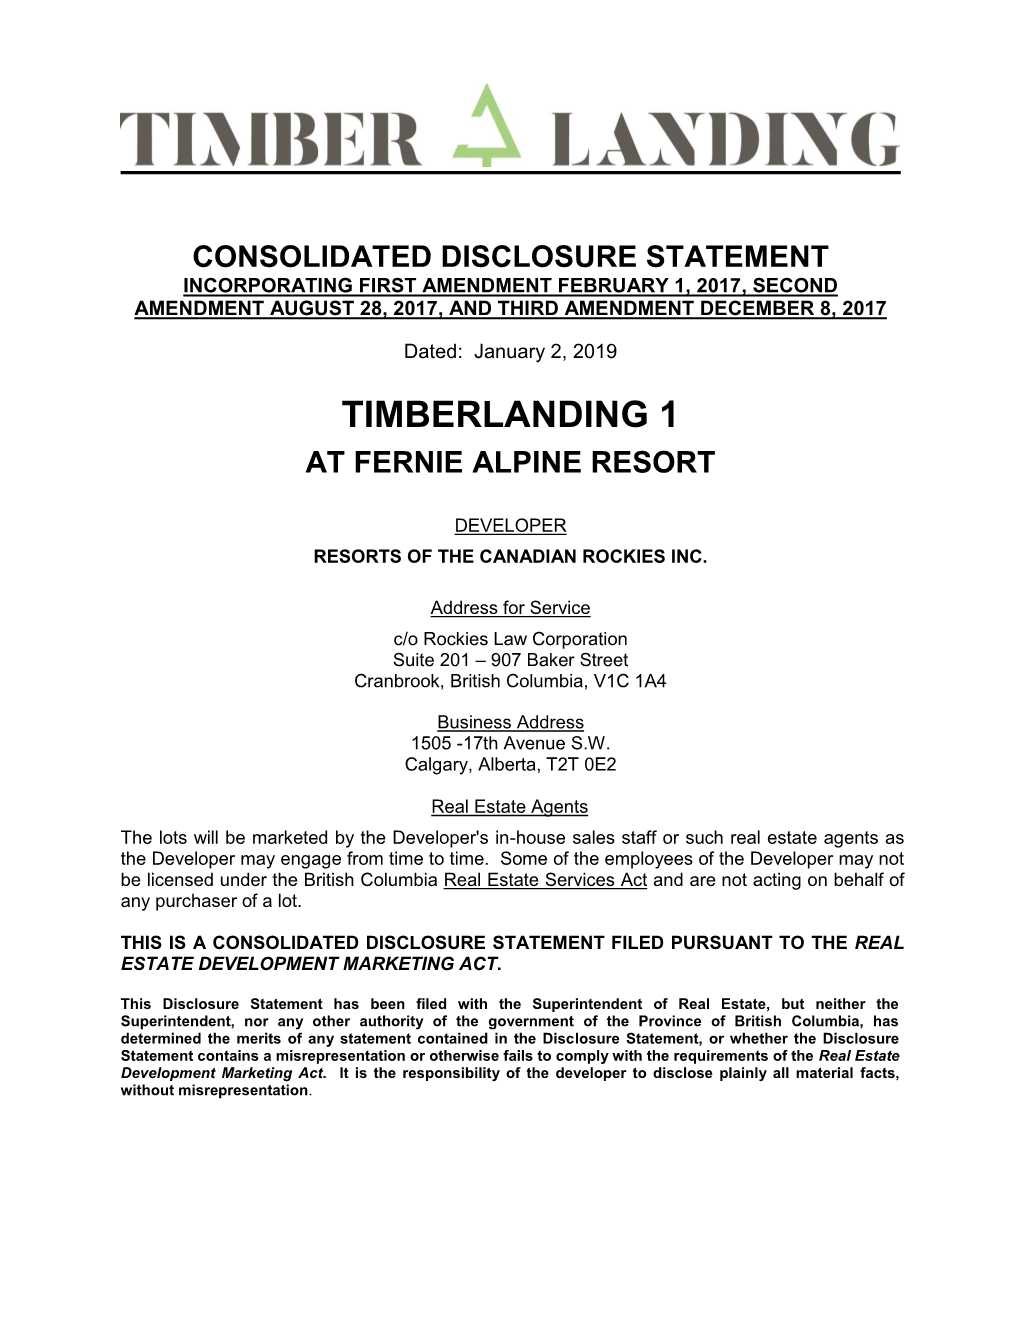 Timberlanding 1 at Fernie Alpine Resort